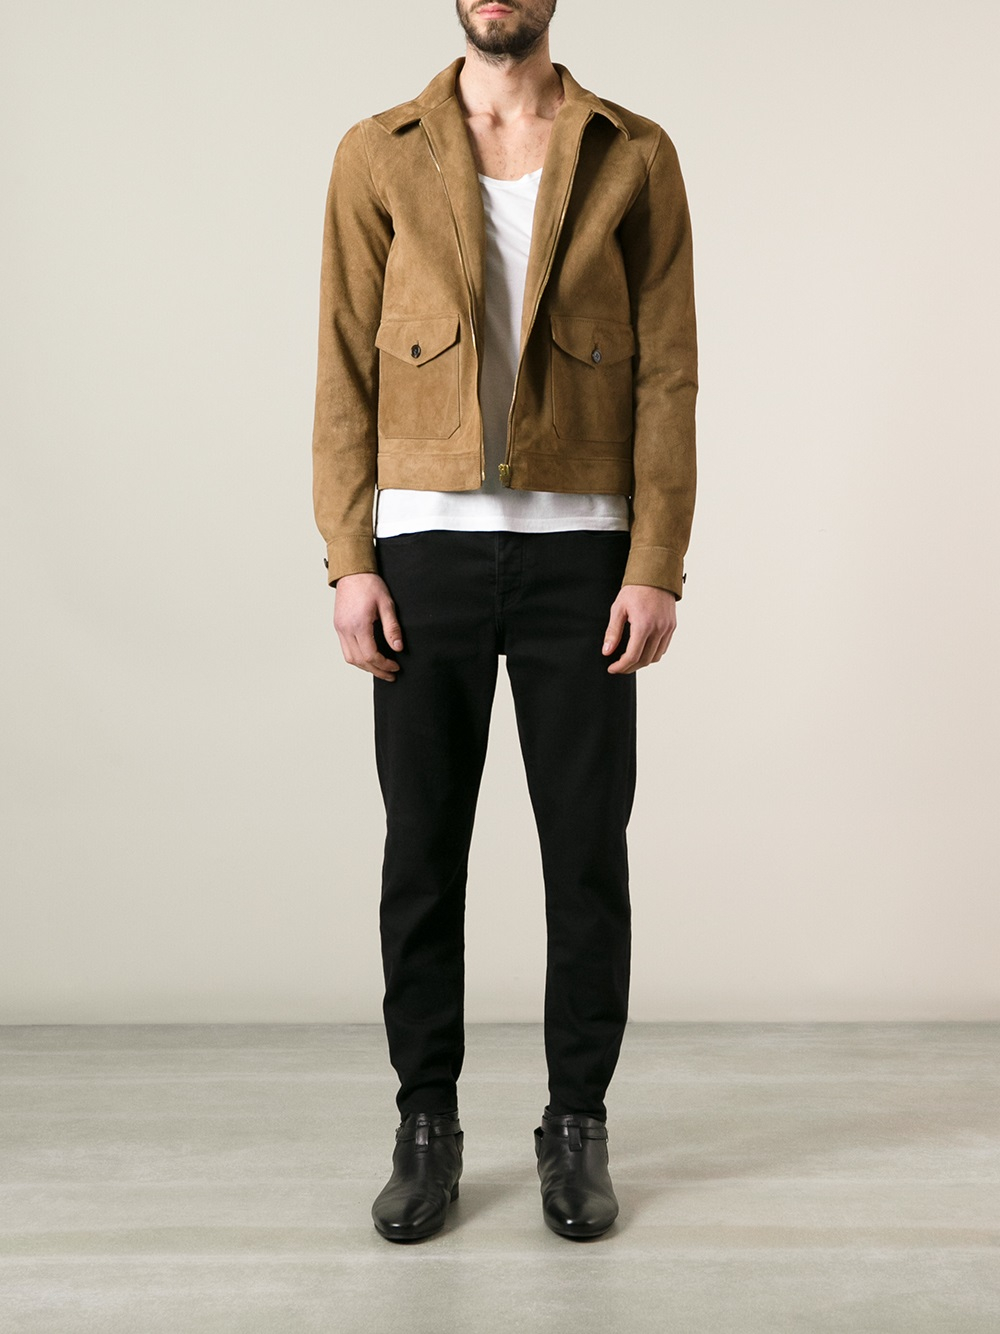 Saint Laurent Leather Jacket in Brown for Men - Lyst